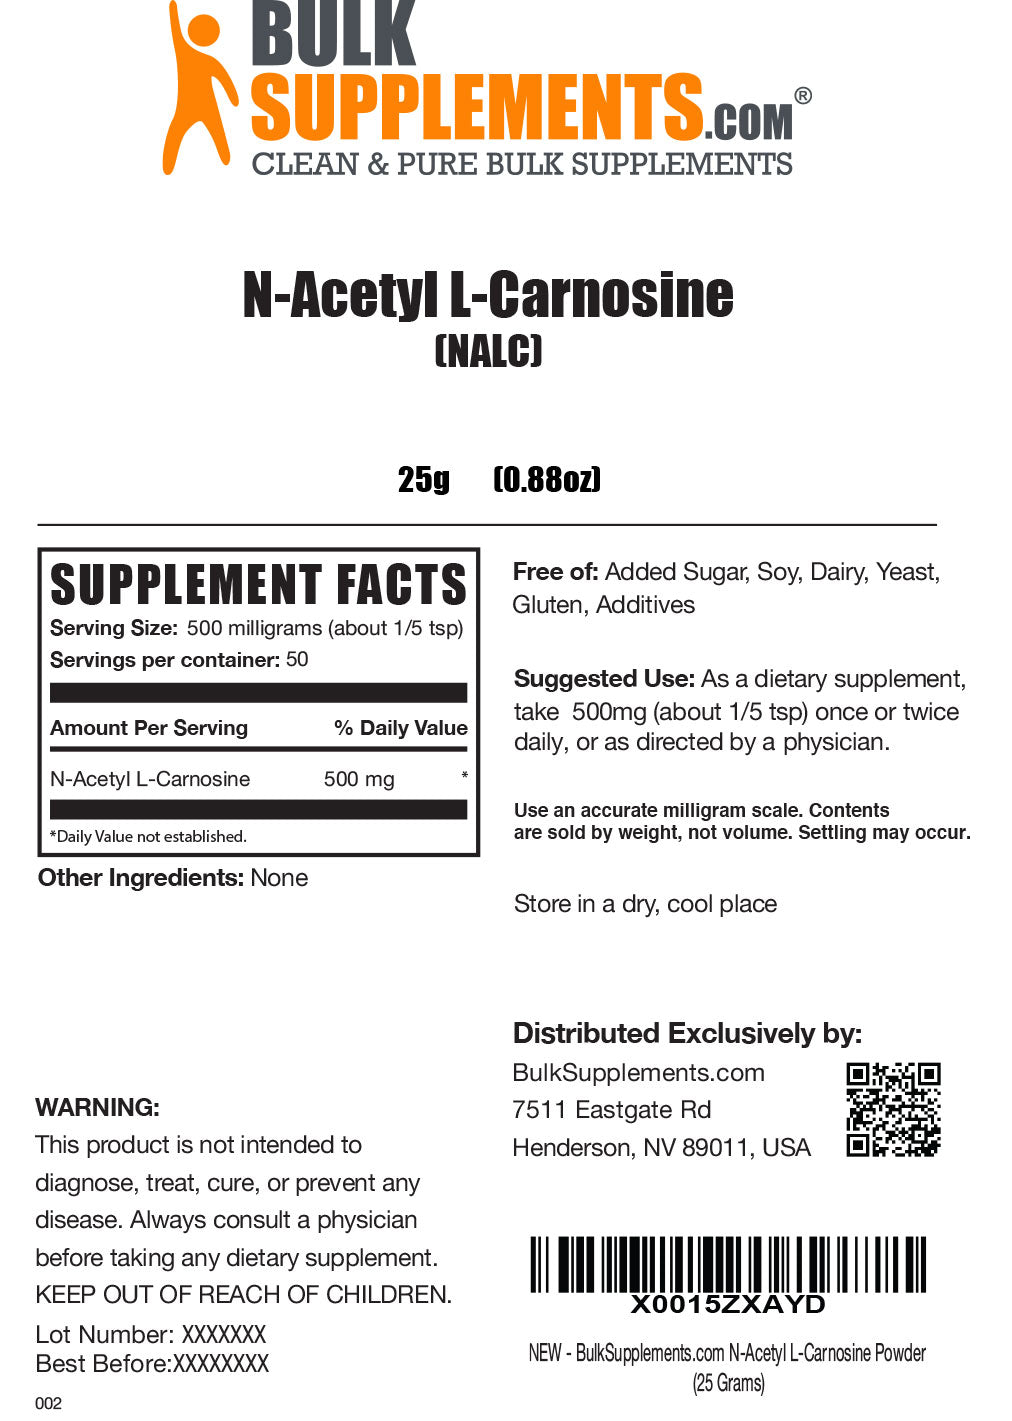 Supplement Facts N-Acetyl L-Carnosine NALC